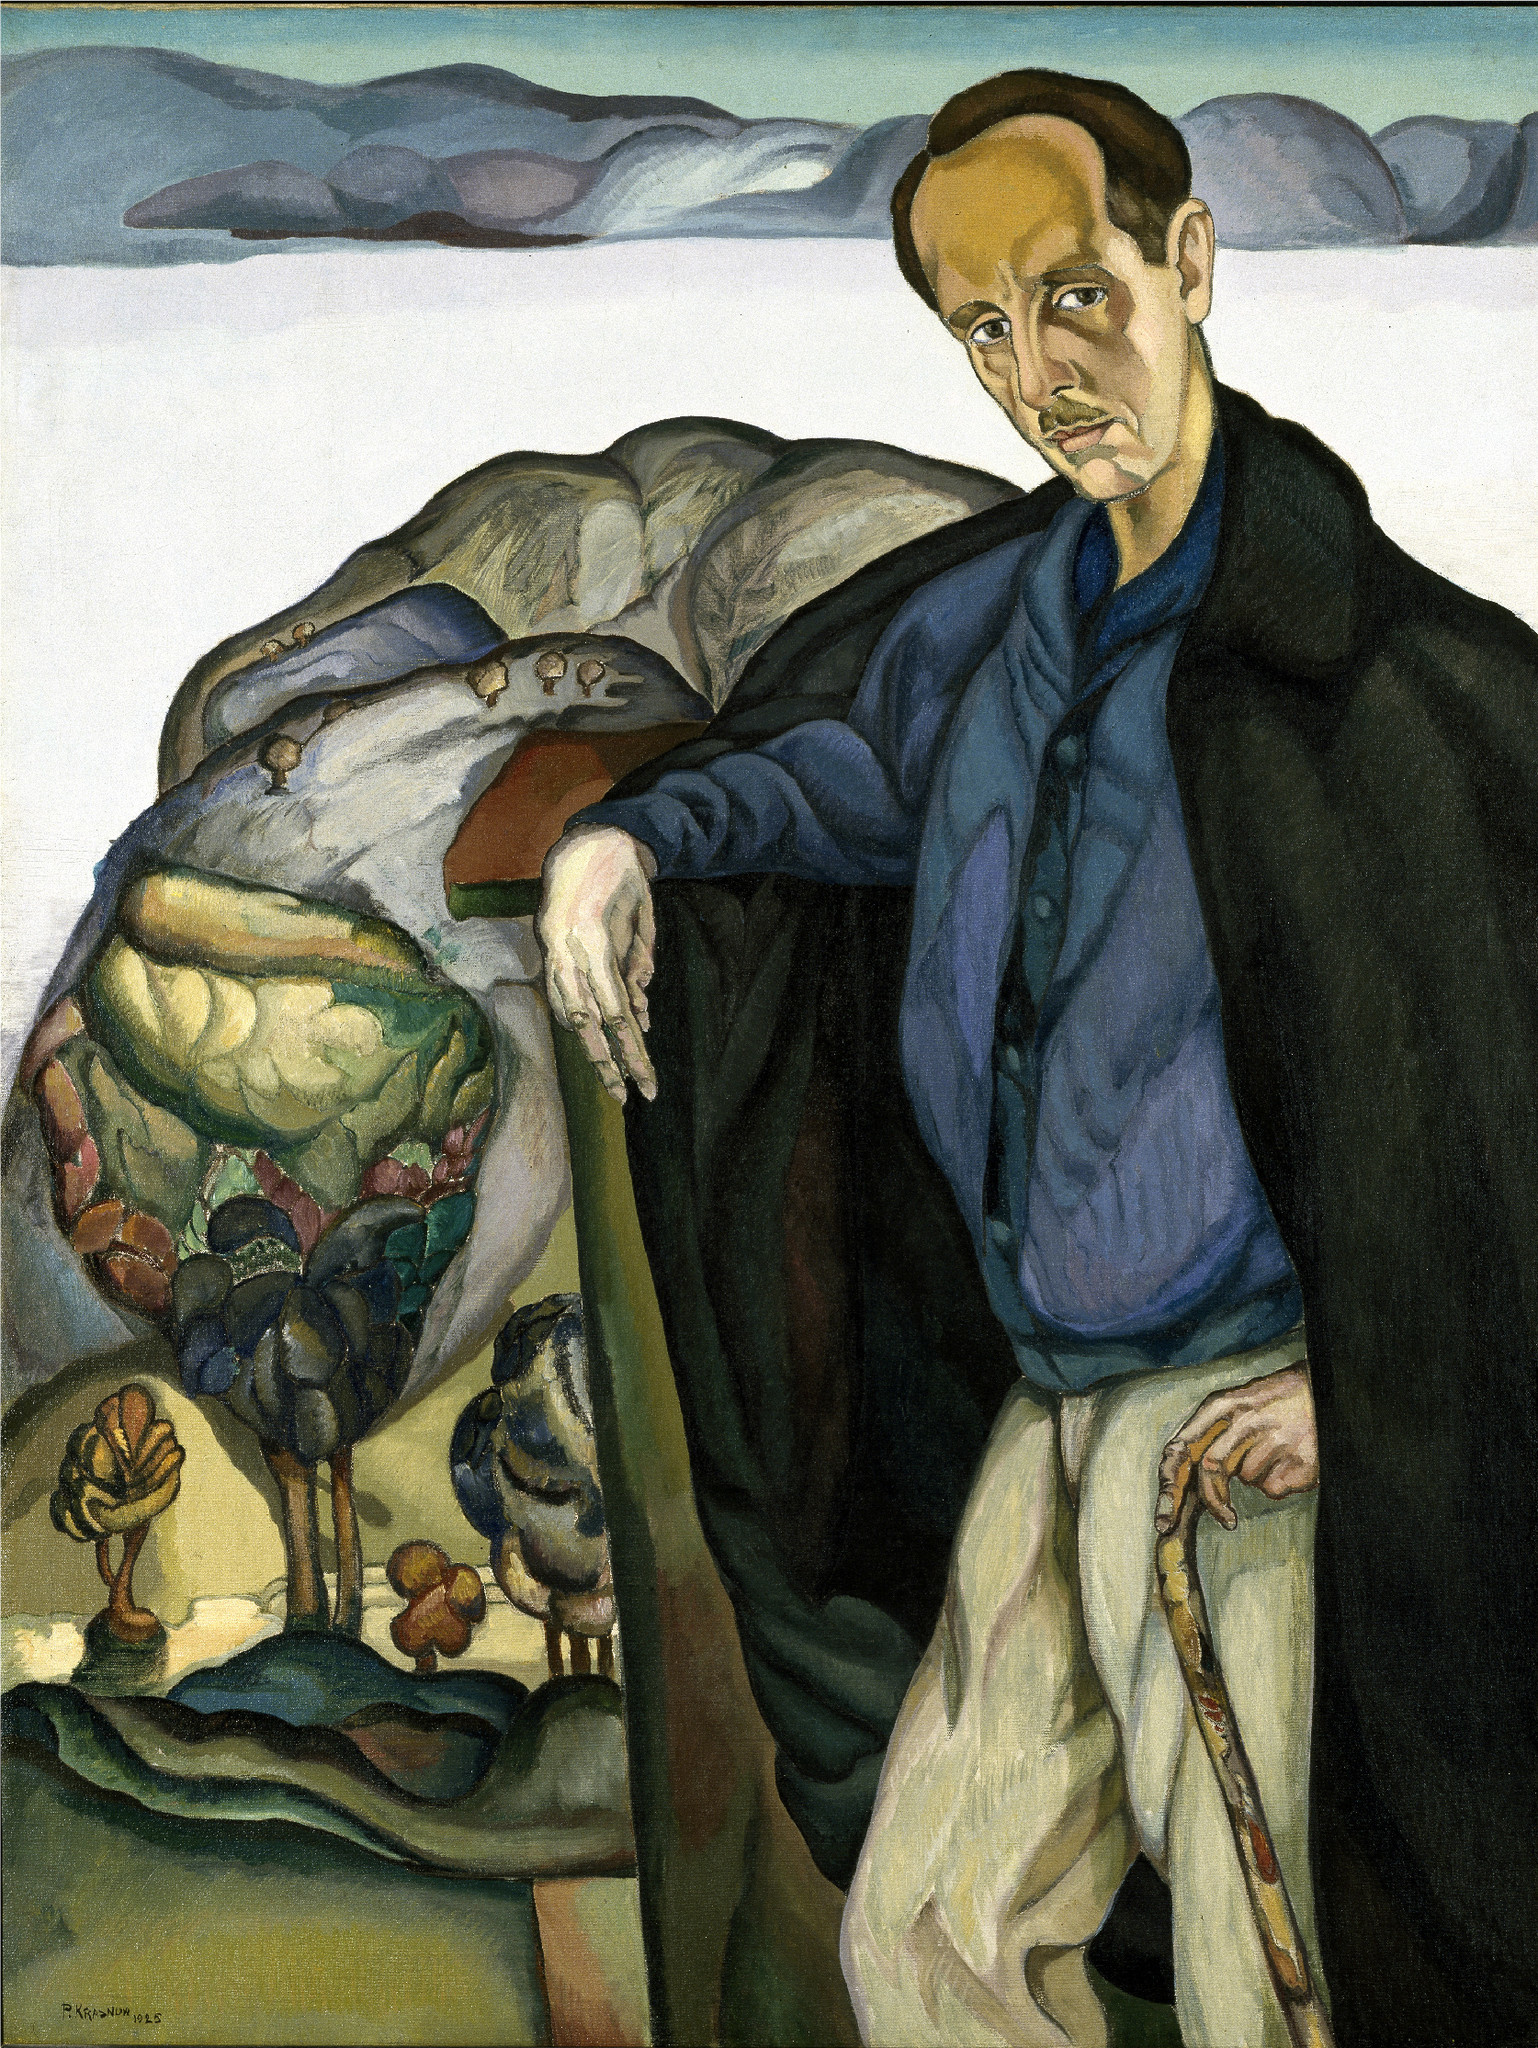 Peter Krasnow, "Edward Henry Weston," 1925, oil on canvas